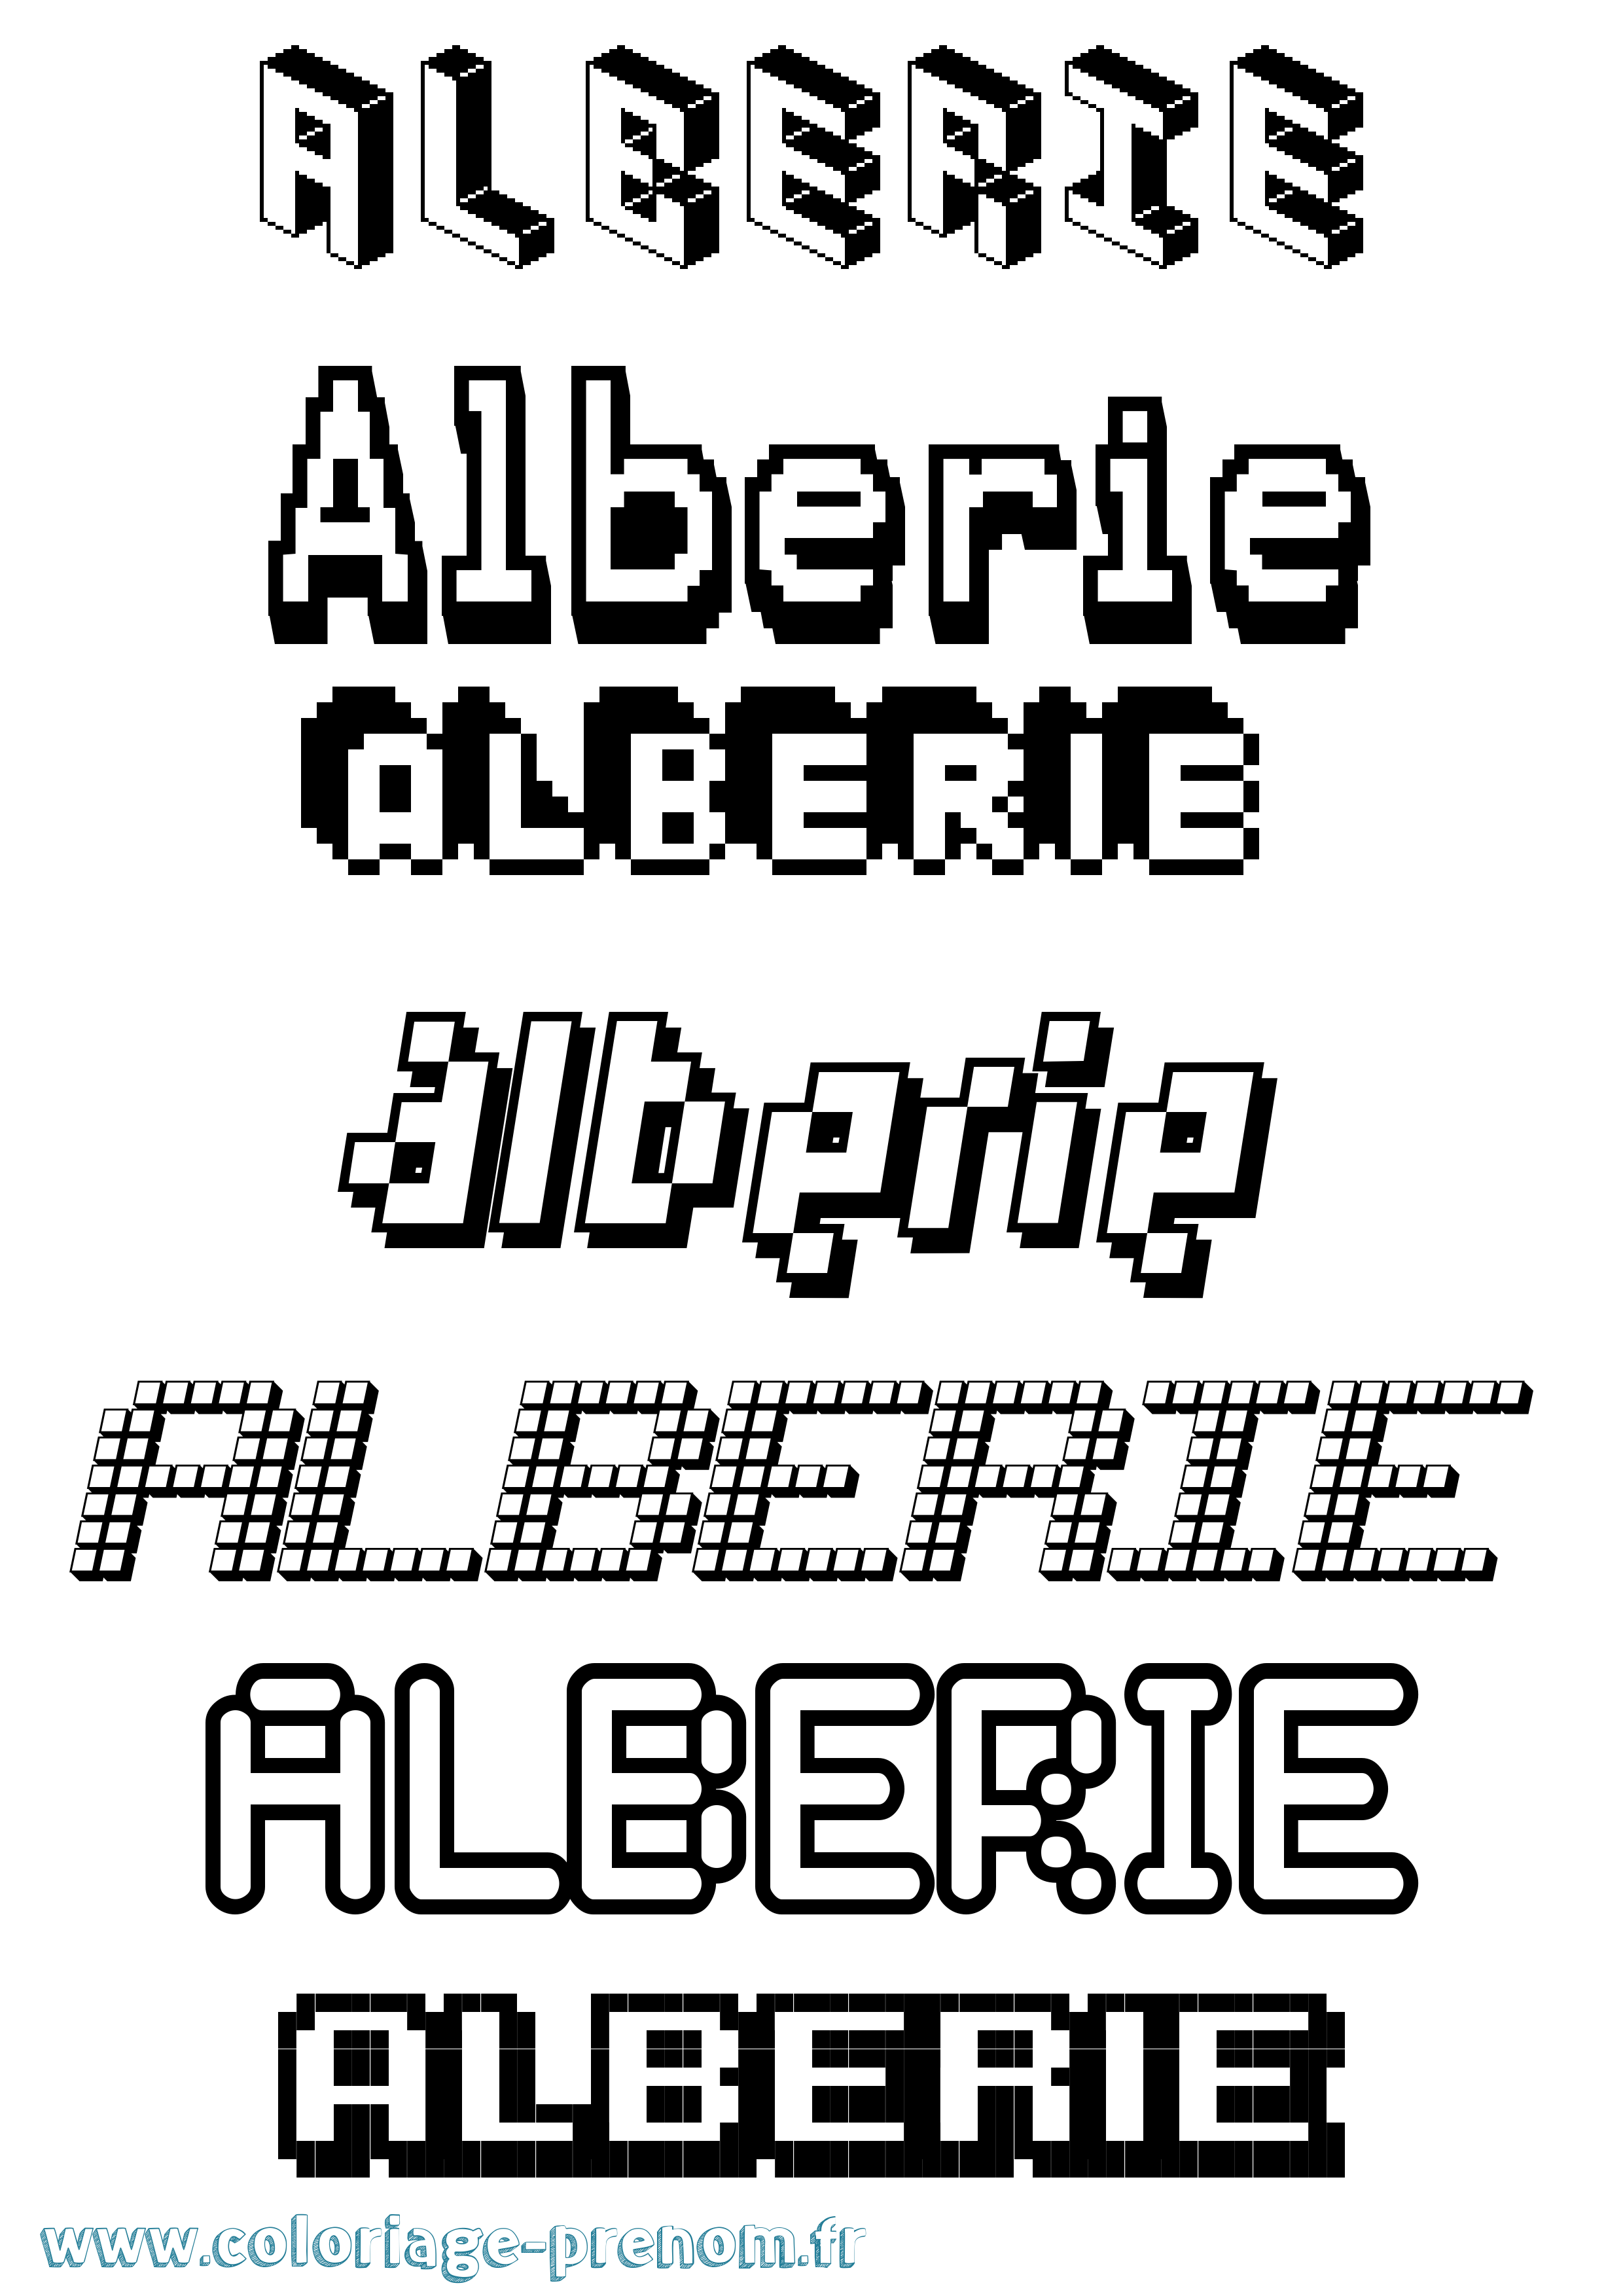 Coloriage prénom Alberie Pixel